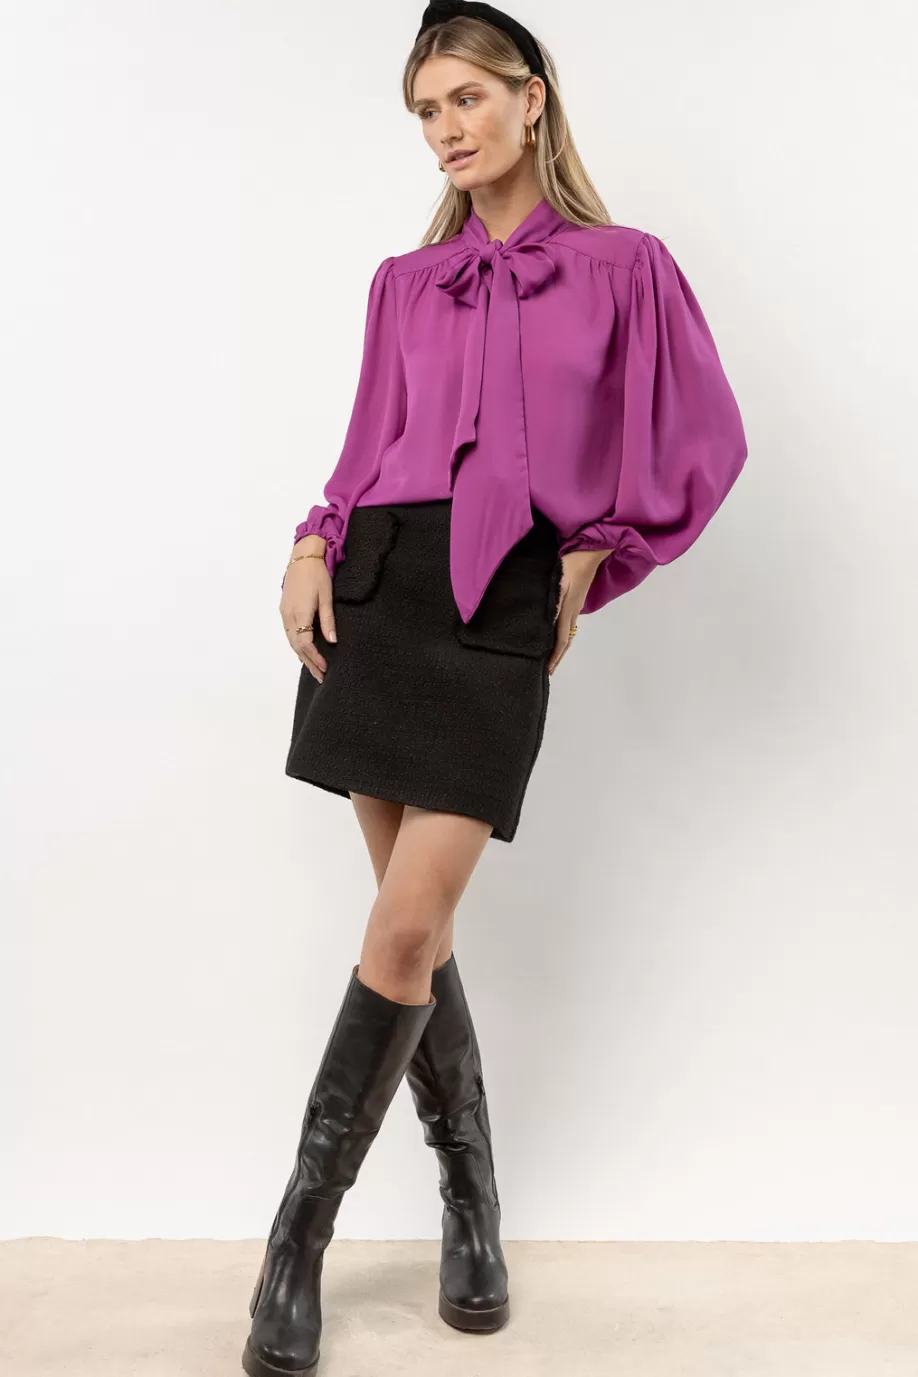 Cheap Josie Long Sleeve Blouse - FINAL SALE BLOUSES | BLOUSES